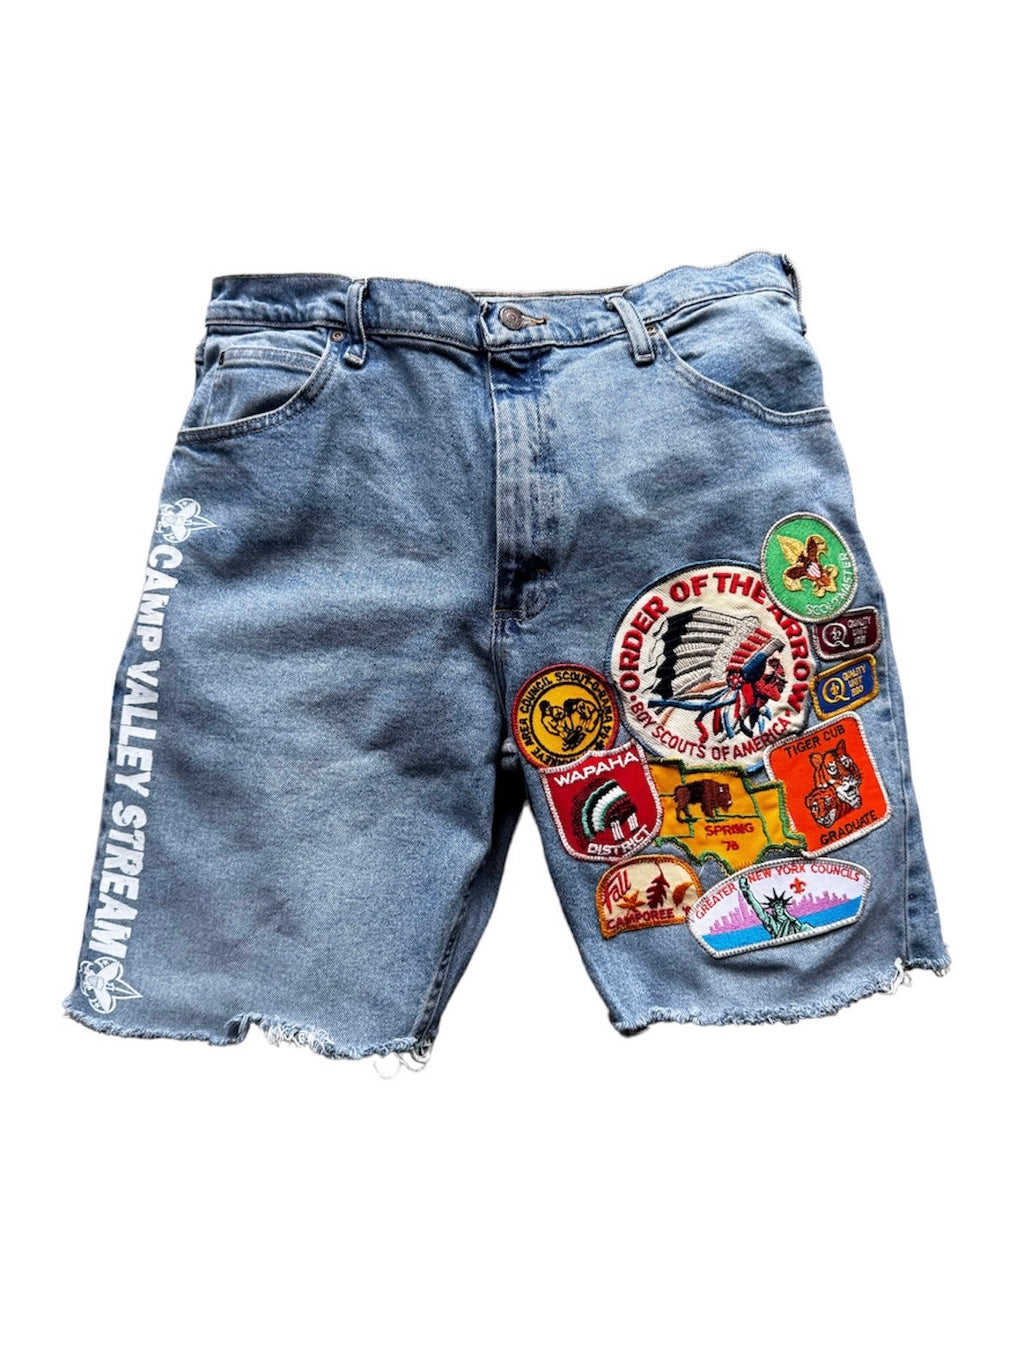 Boy Scout Denim Shorts